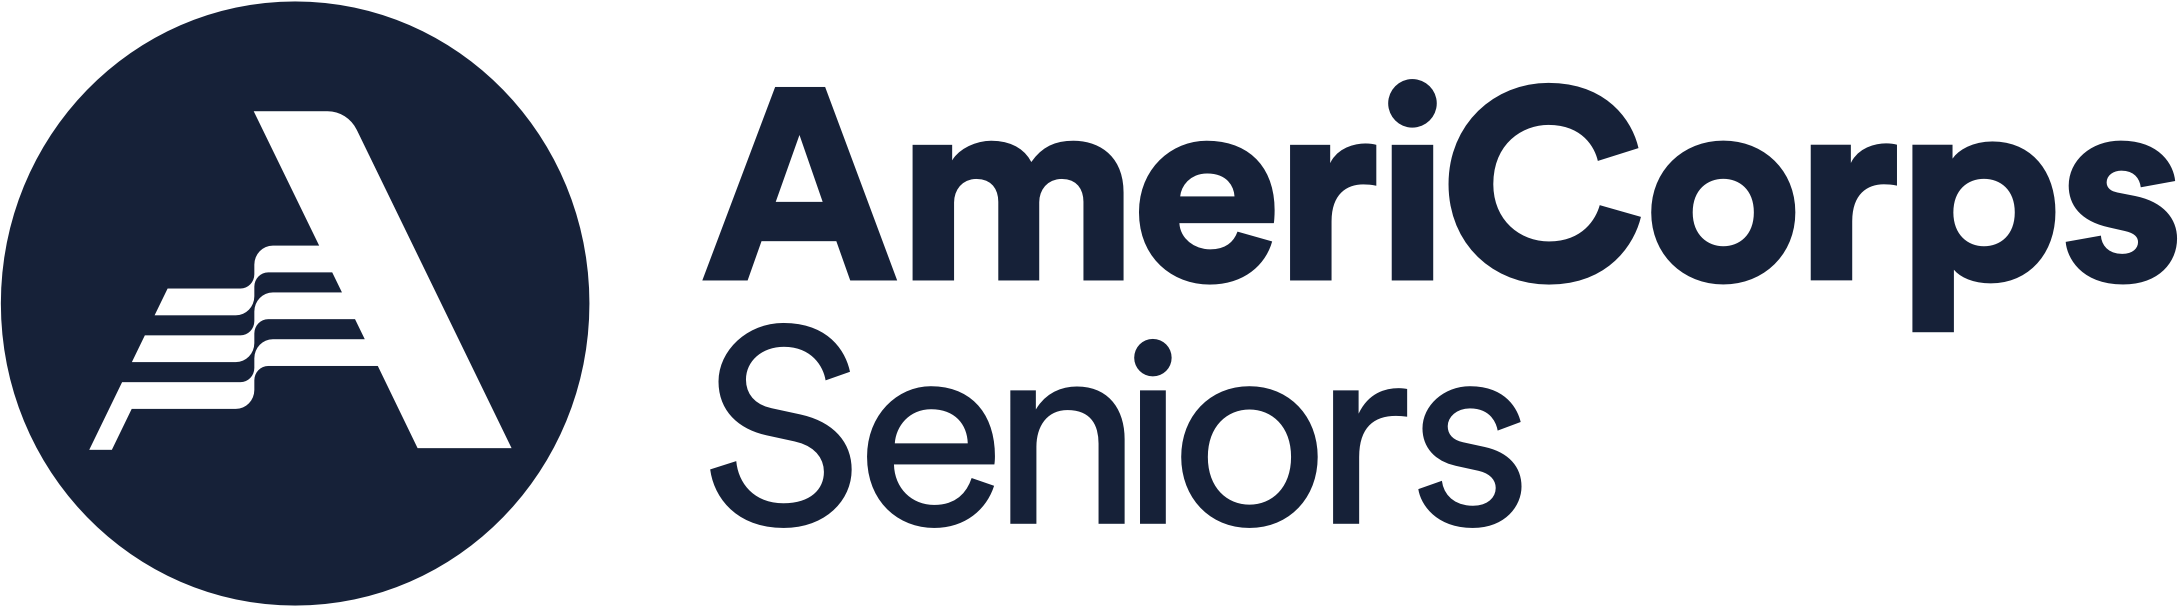 AmeriCorps Seniors